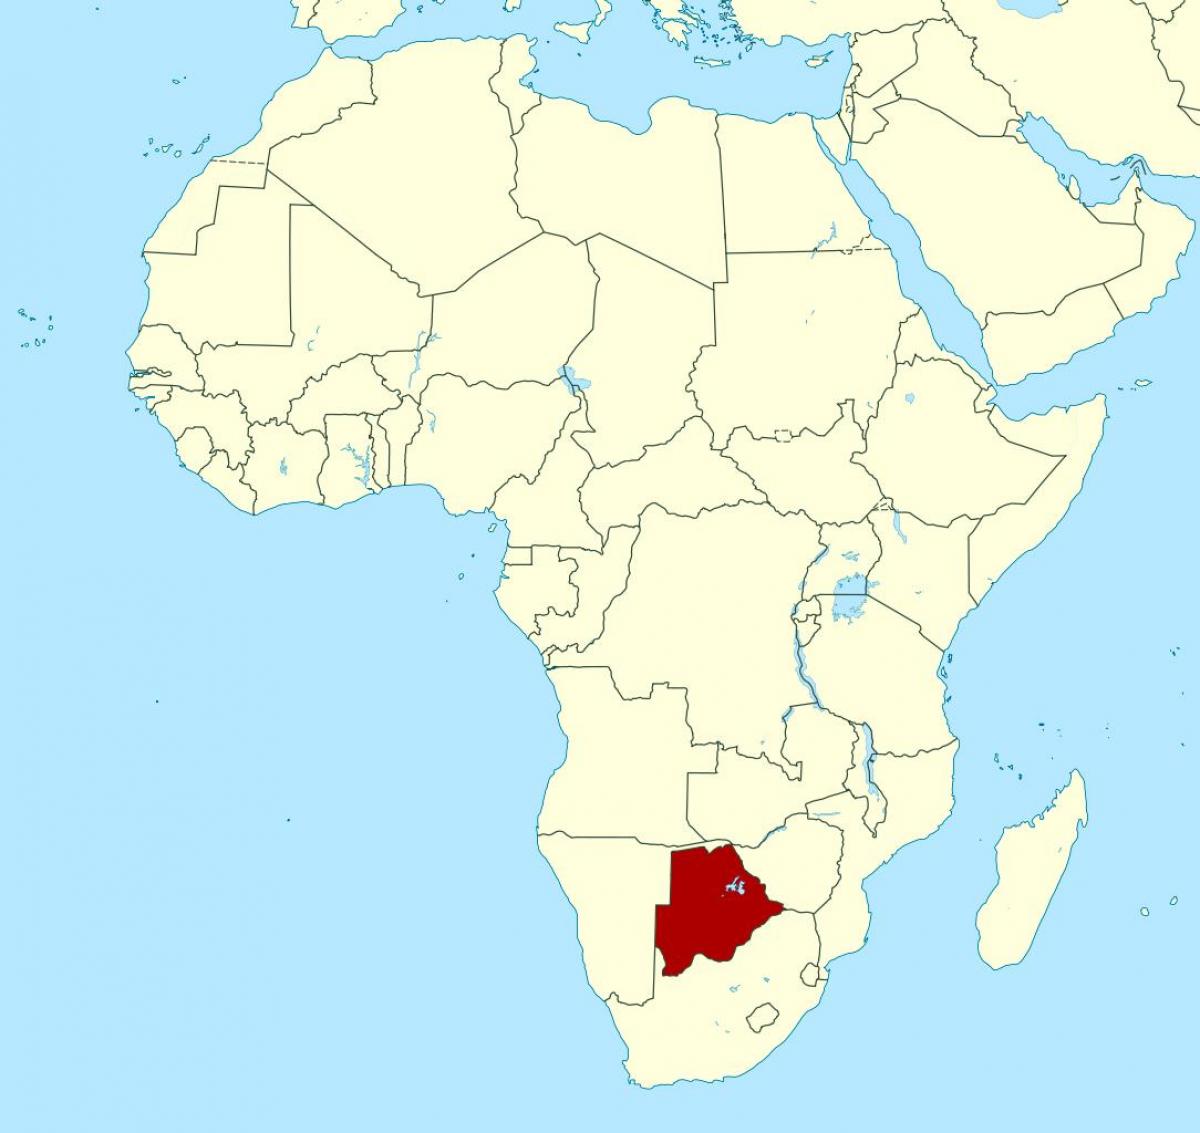 Karte von Botswana, Afrika